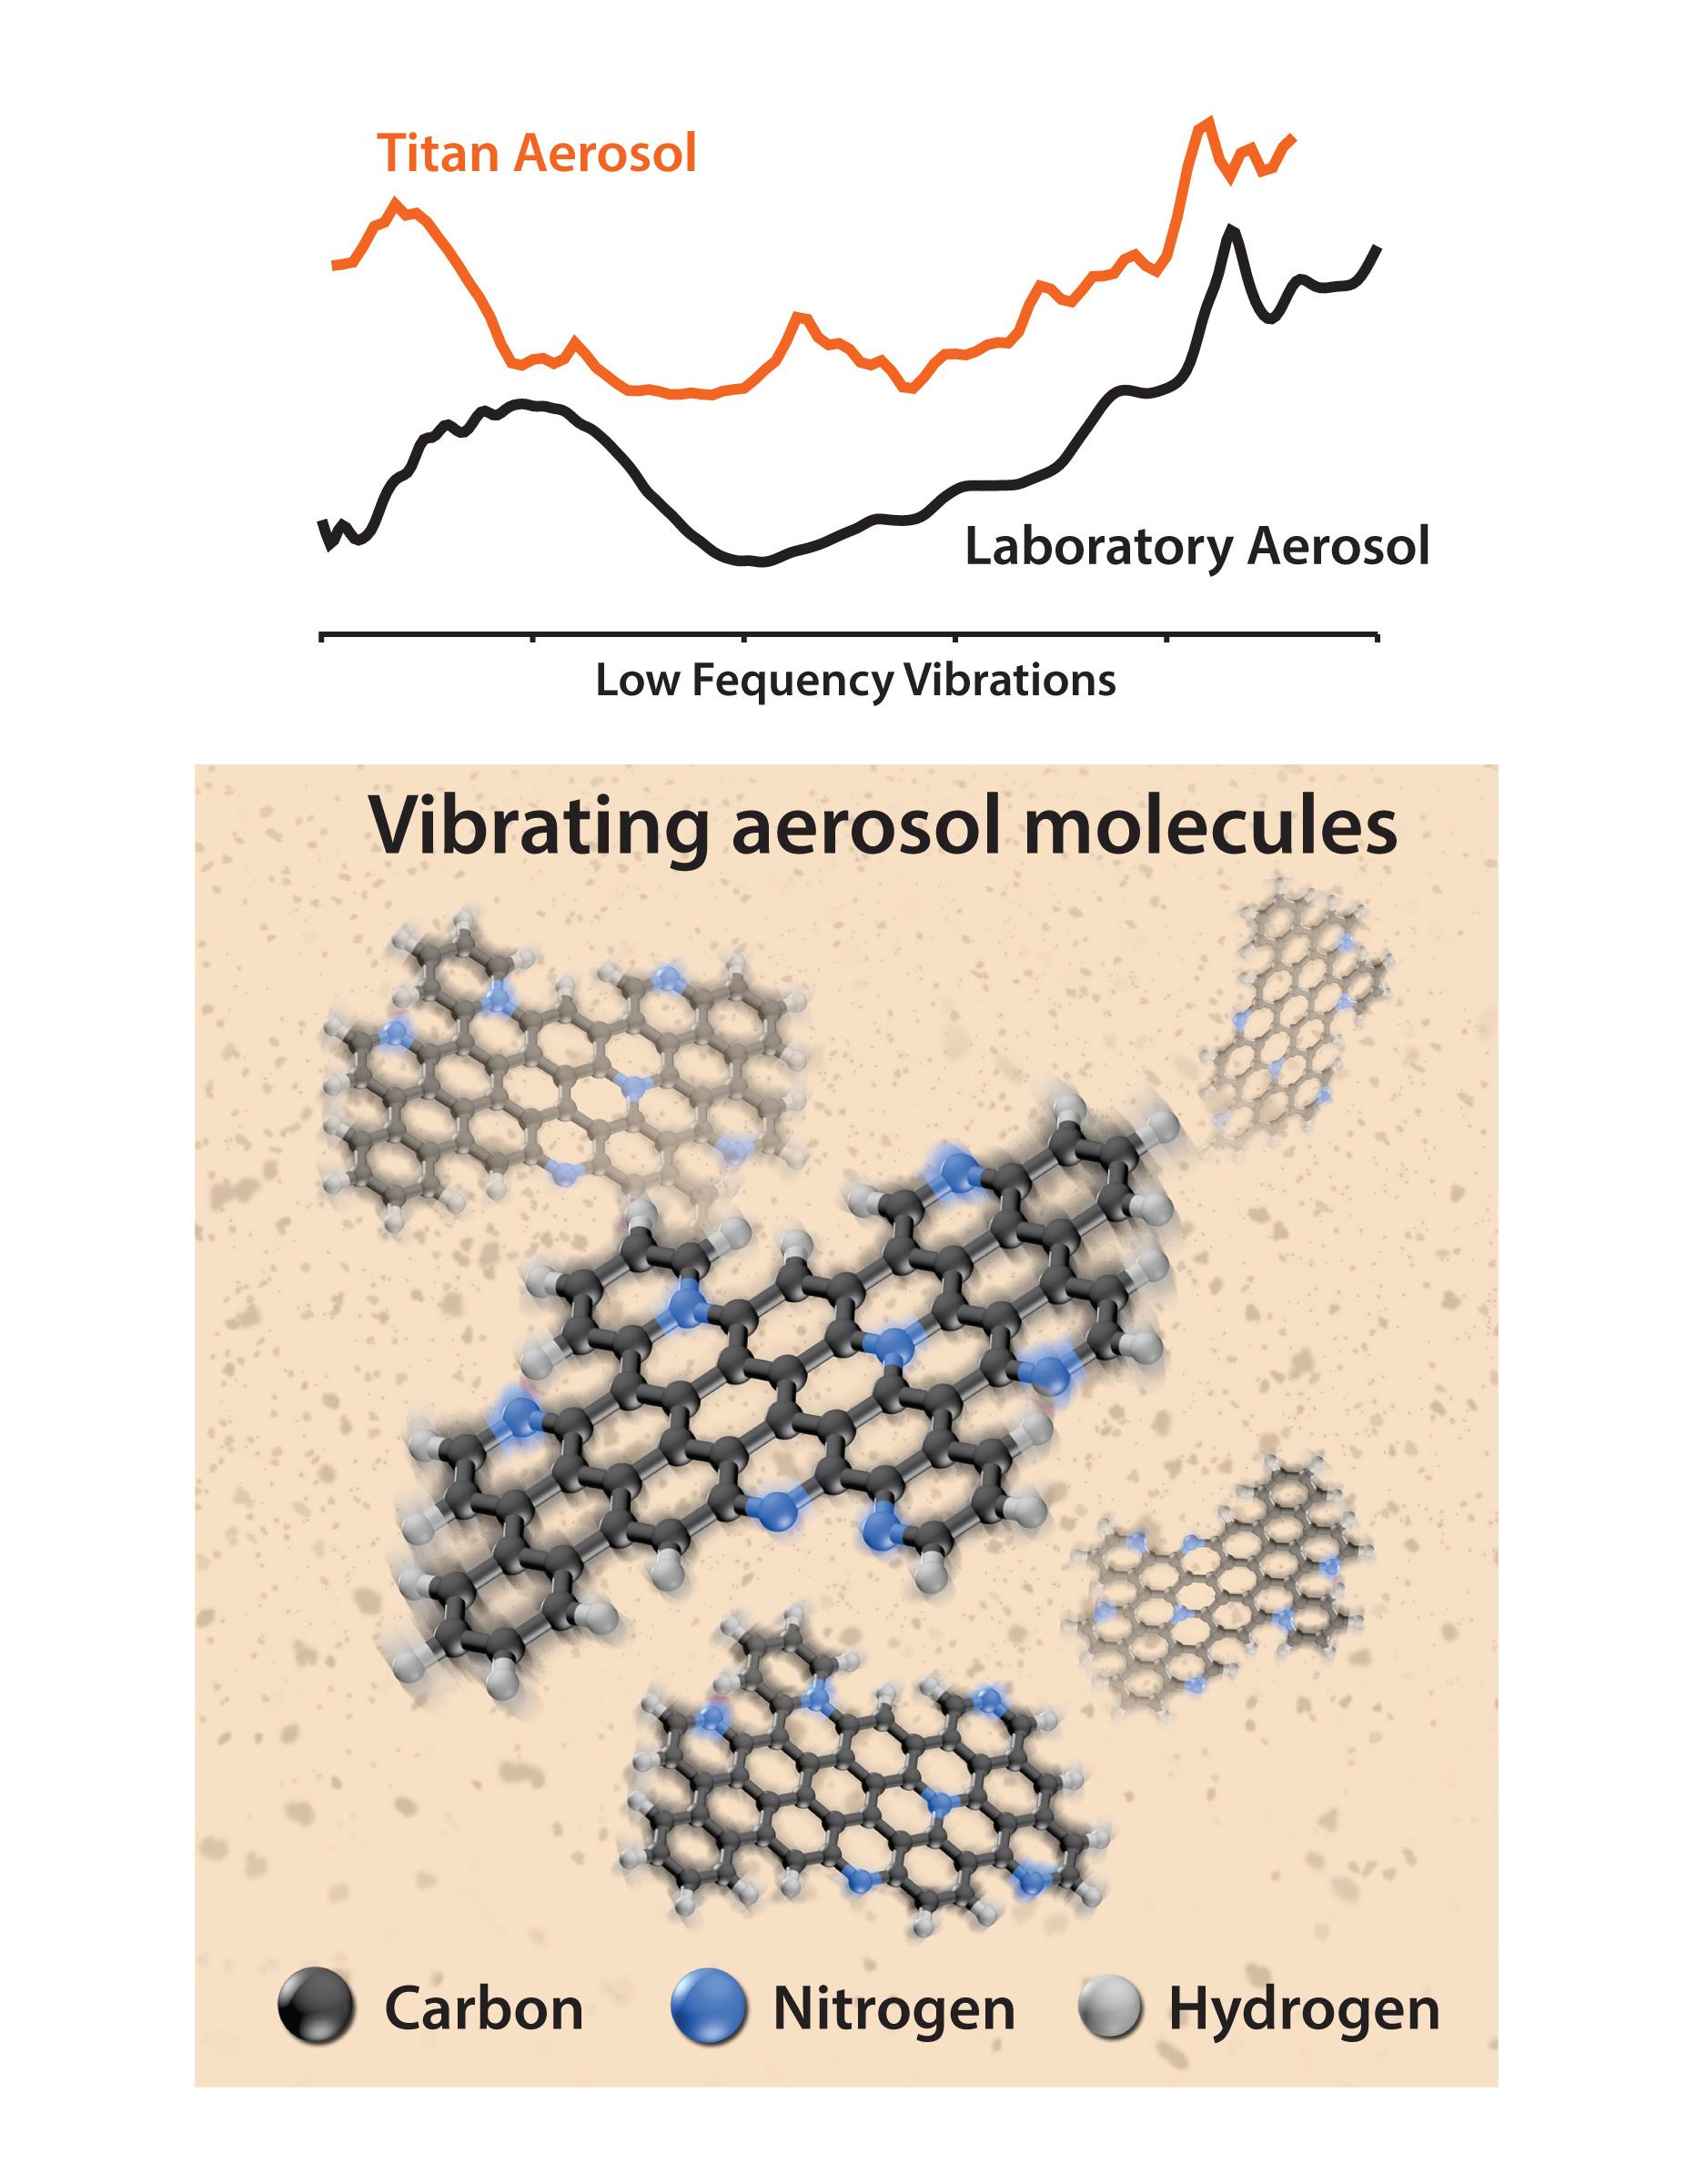 Close up of vibrating Aerosol Molecules on Titan